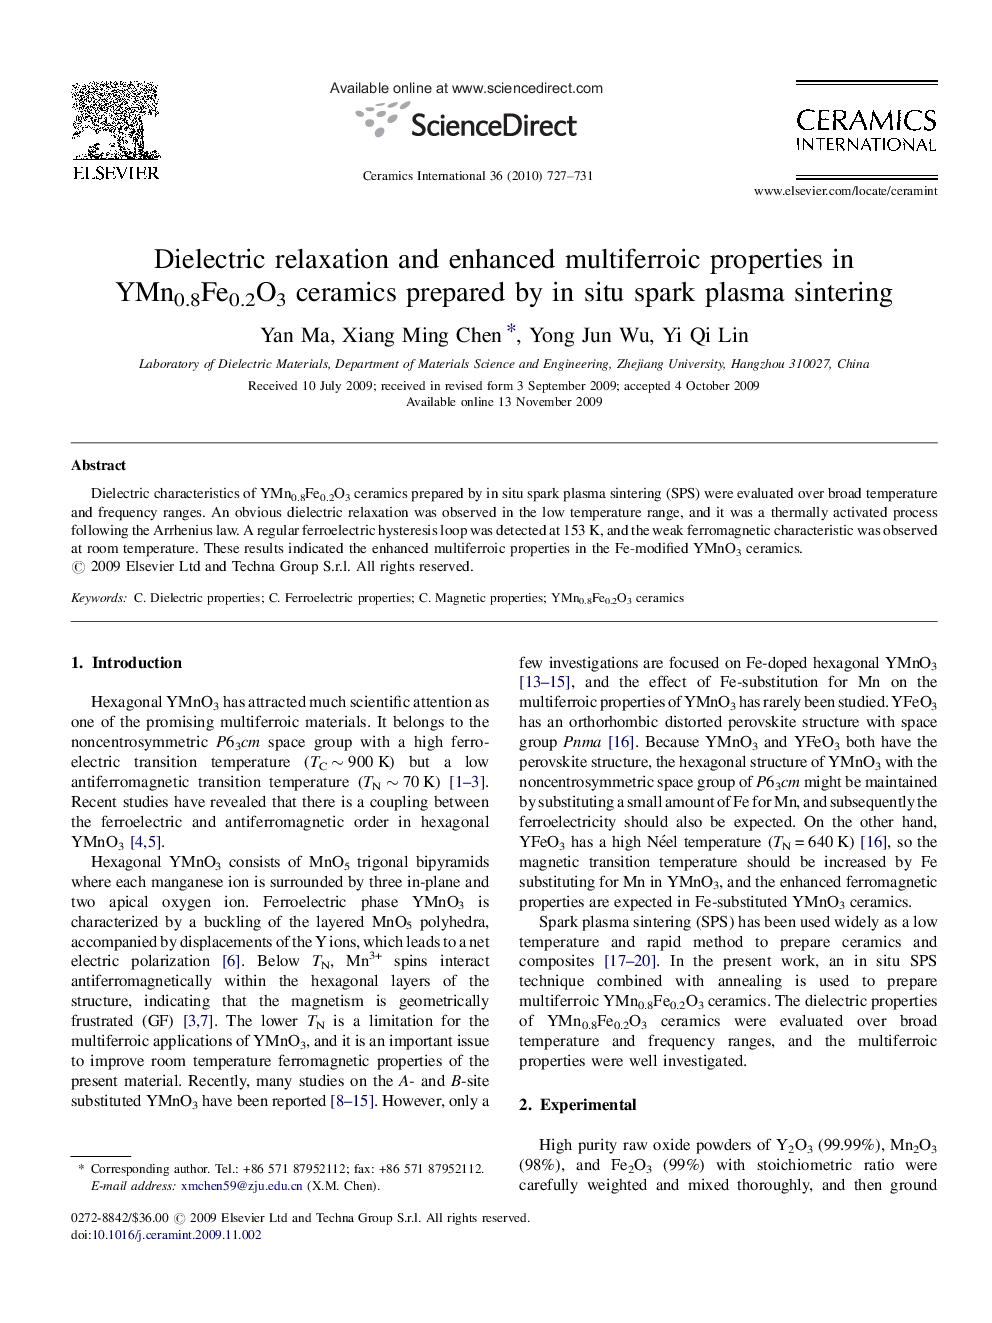 Dielectric relaxation and enhanced multiferroic properties in YMn0.8Fe0.2O3 ceramics prepared by in situ spark plasma sintering